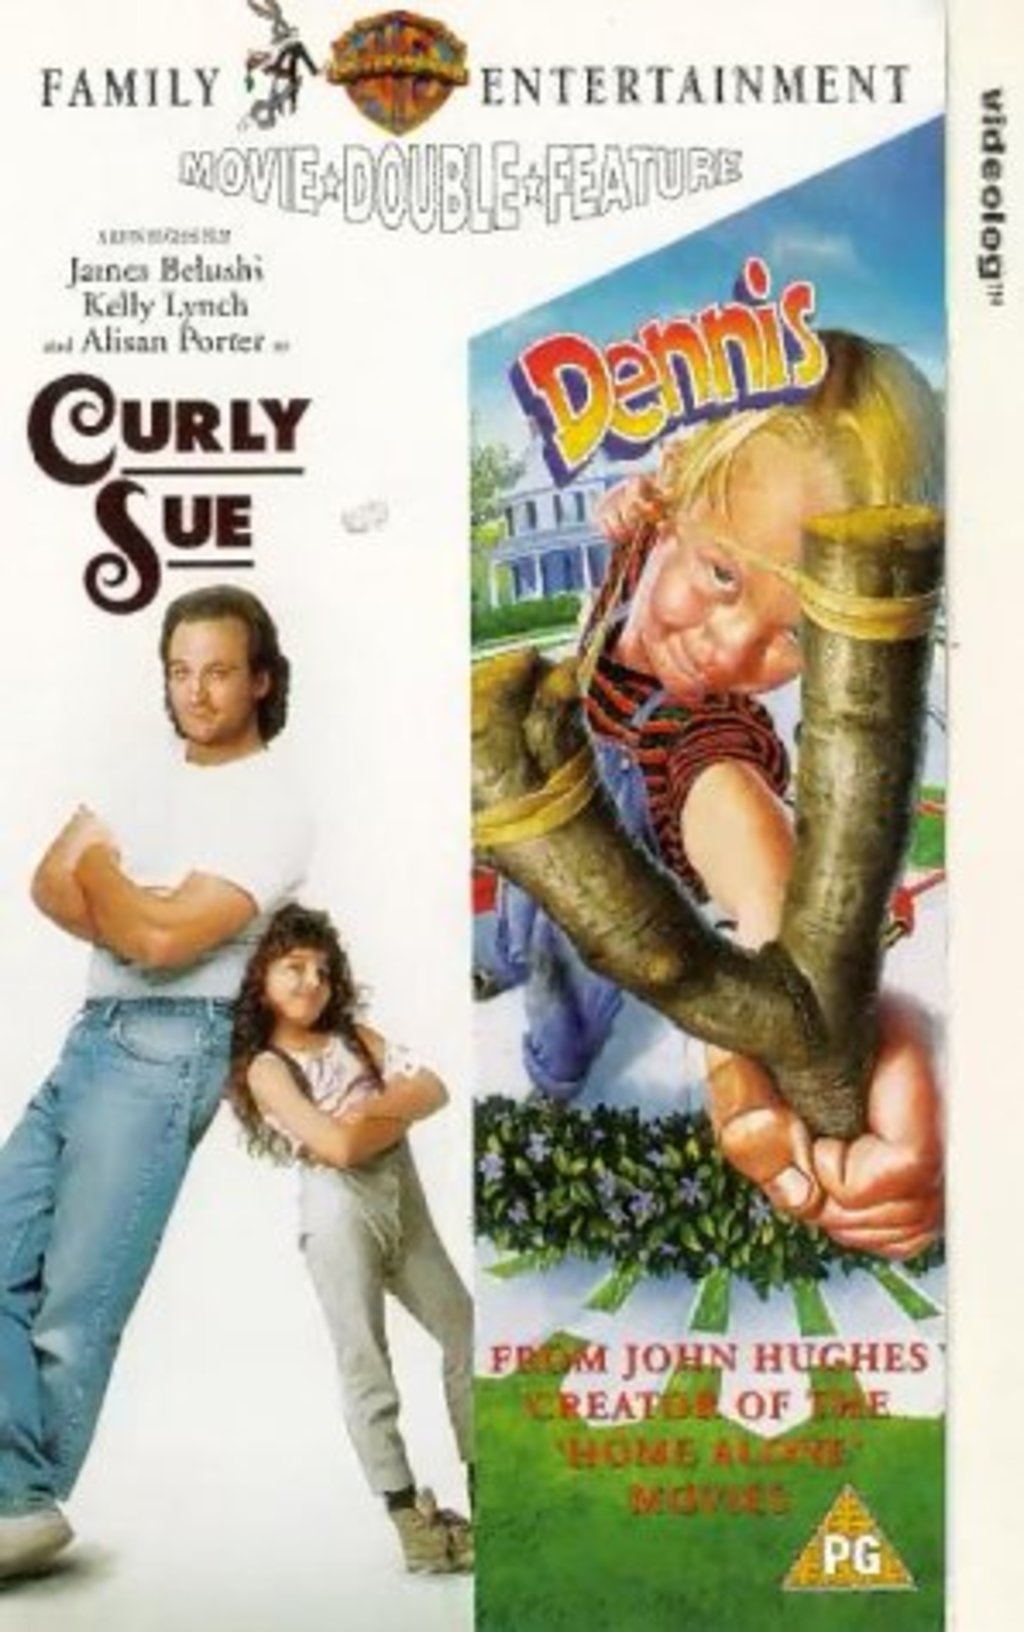 Watch Curly Sue on Netflix Today! | NetflixMovies.com